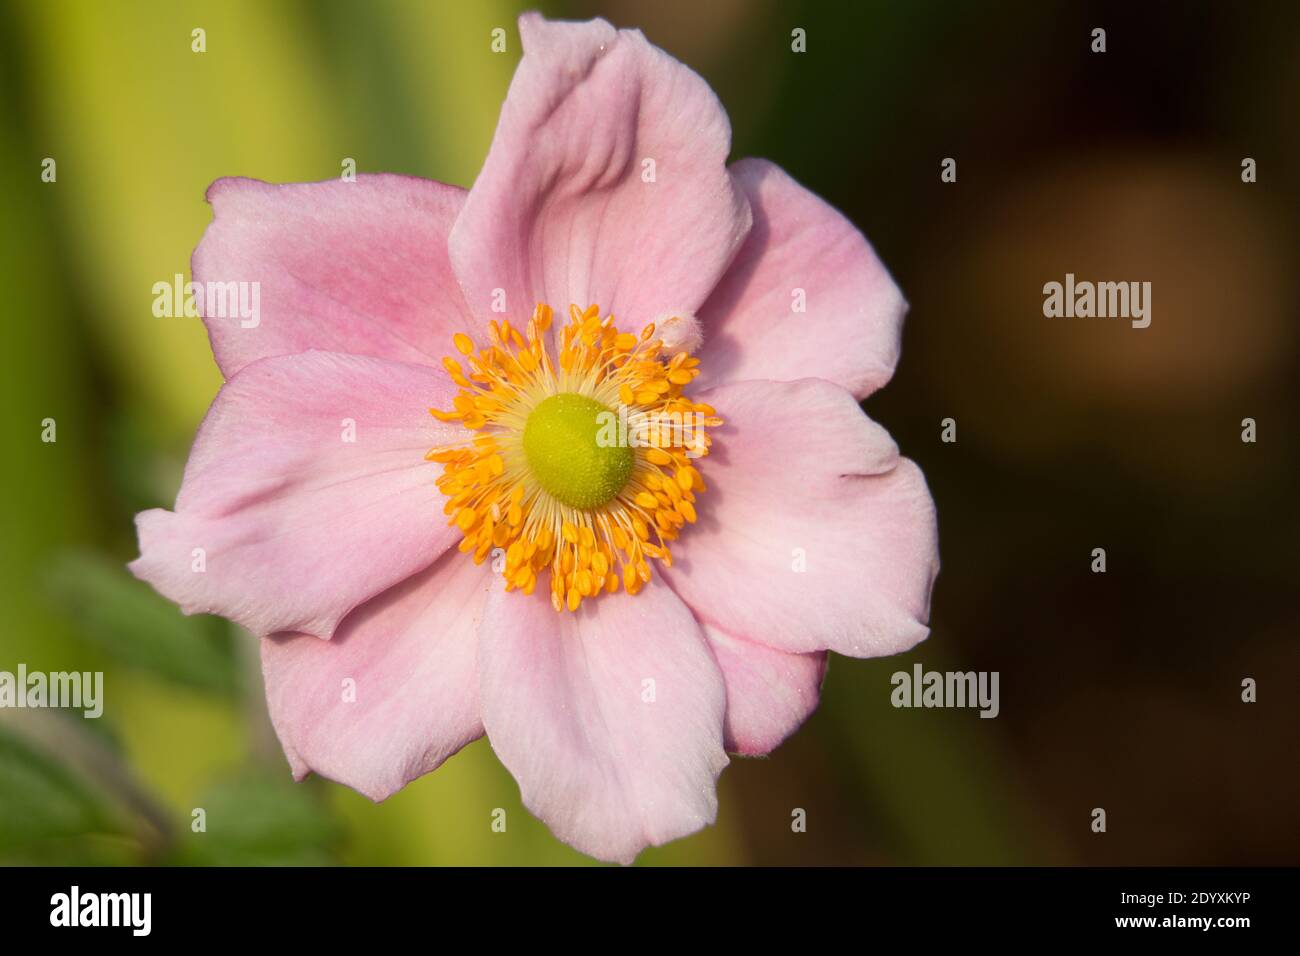 Pink Japanese anemone flower, Anemone x hybrida elegans, Japanese tumbleweed or windflower, closeup, natural green background Stock Photo